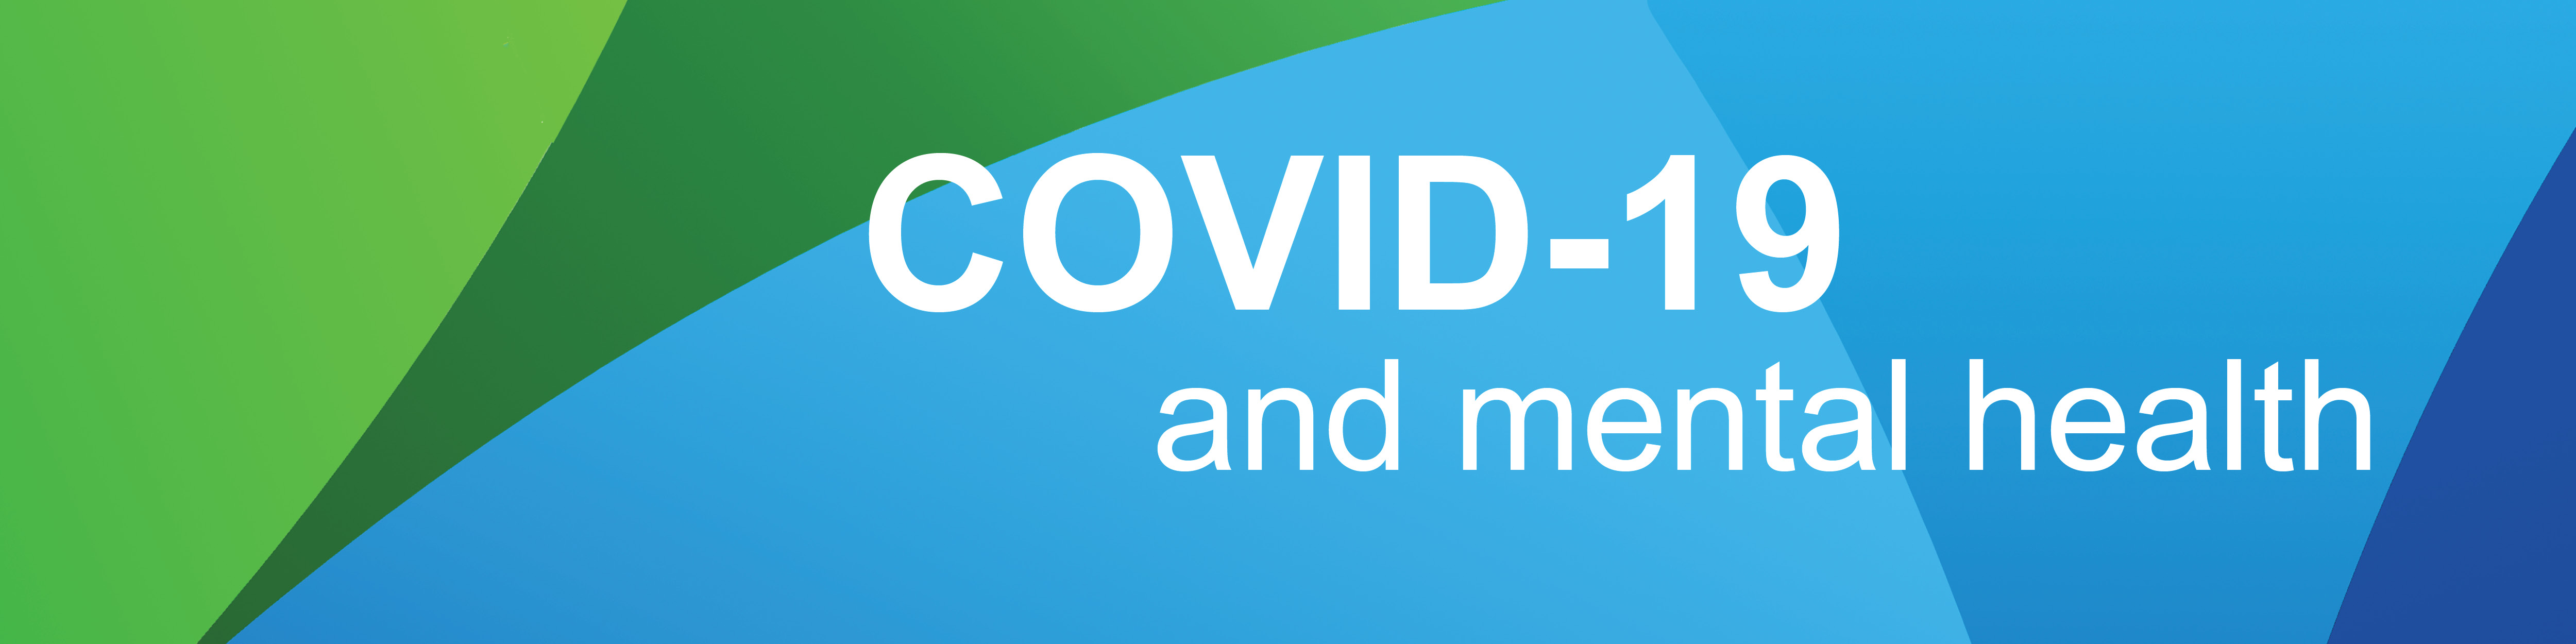 COVID-19 webpage header